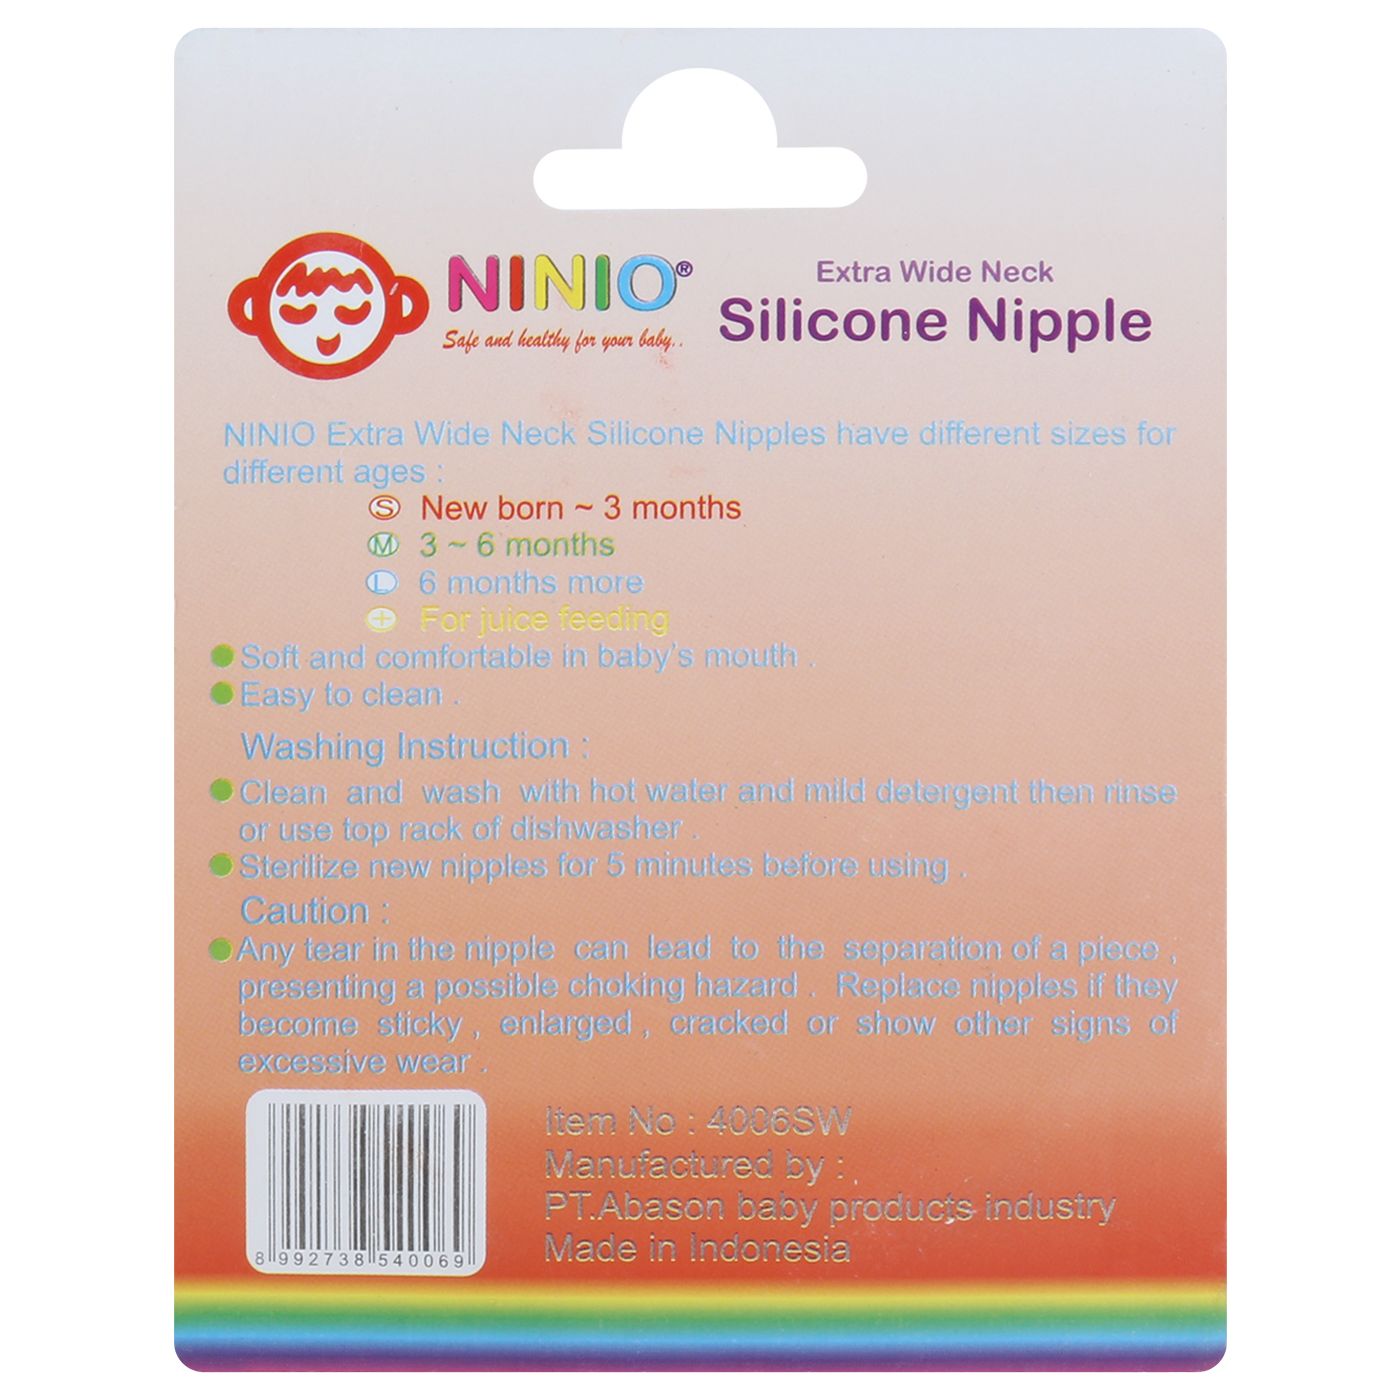 Ninio Extra Wide Neck Silicone Nipple - 2